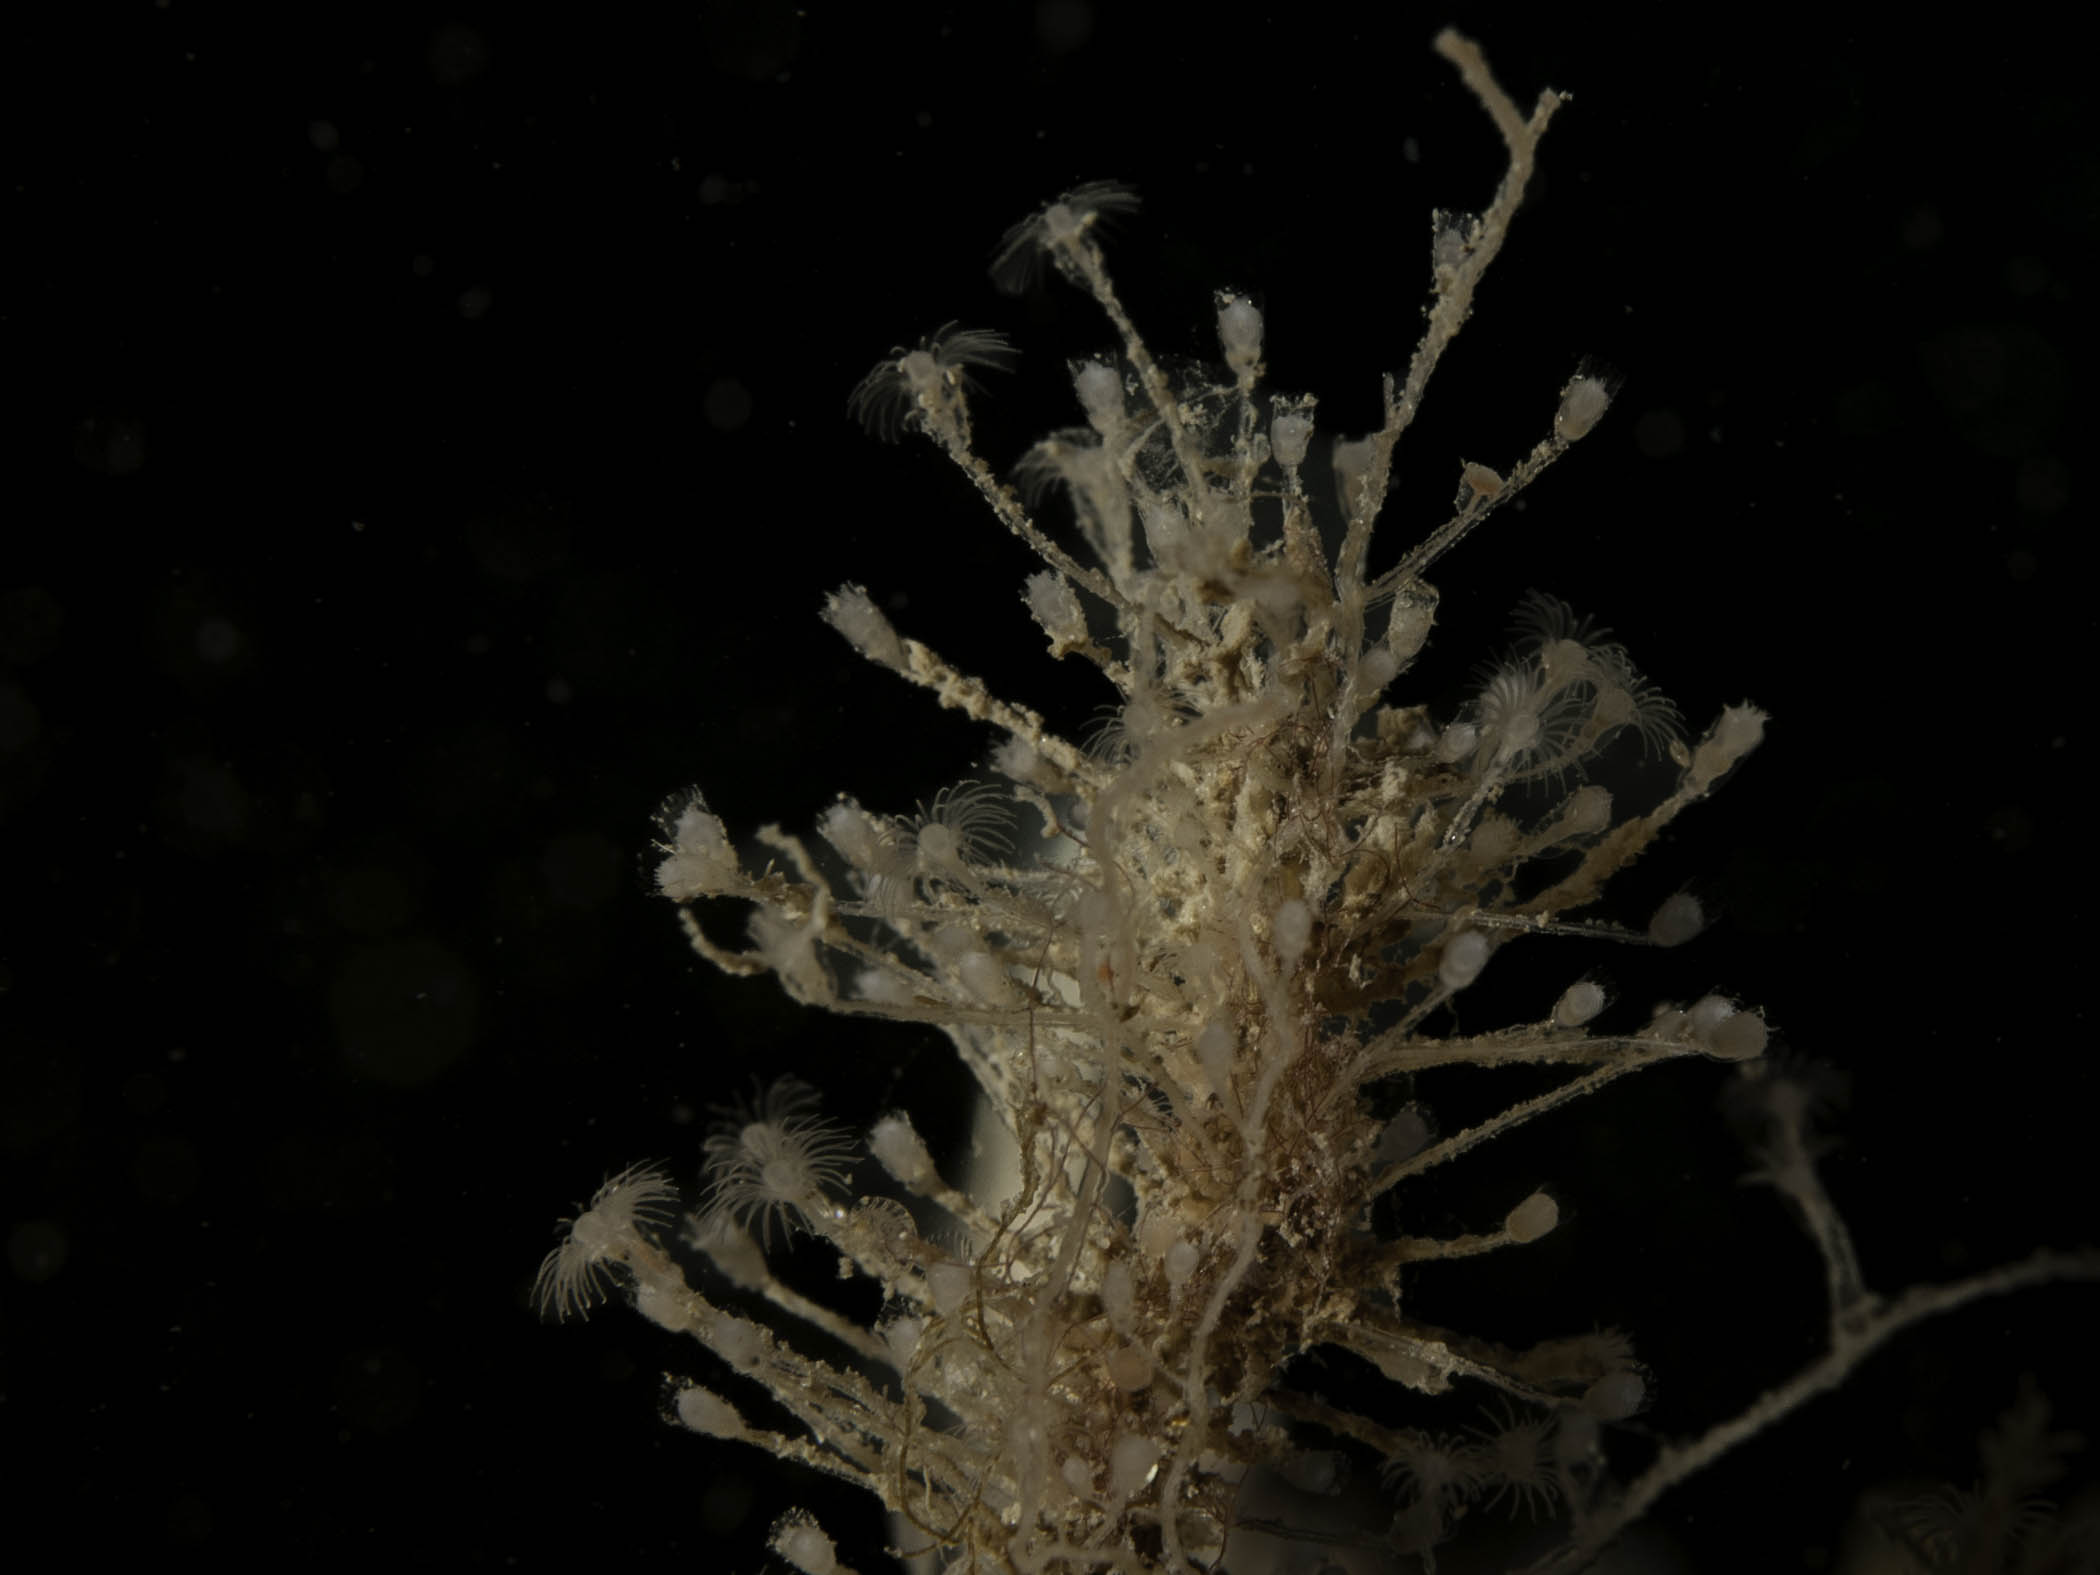 image: Clytia hemisphaerica. Close-up of polyps, The Maidens, Larne, 2007.